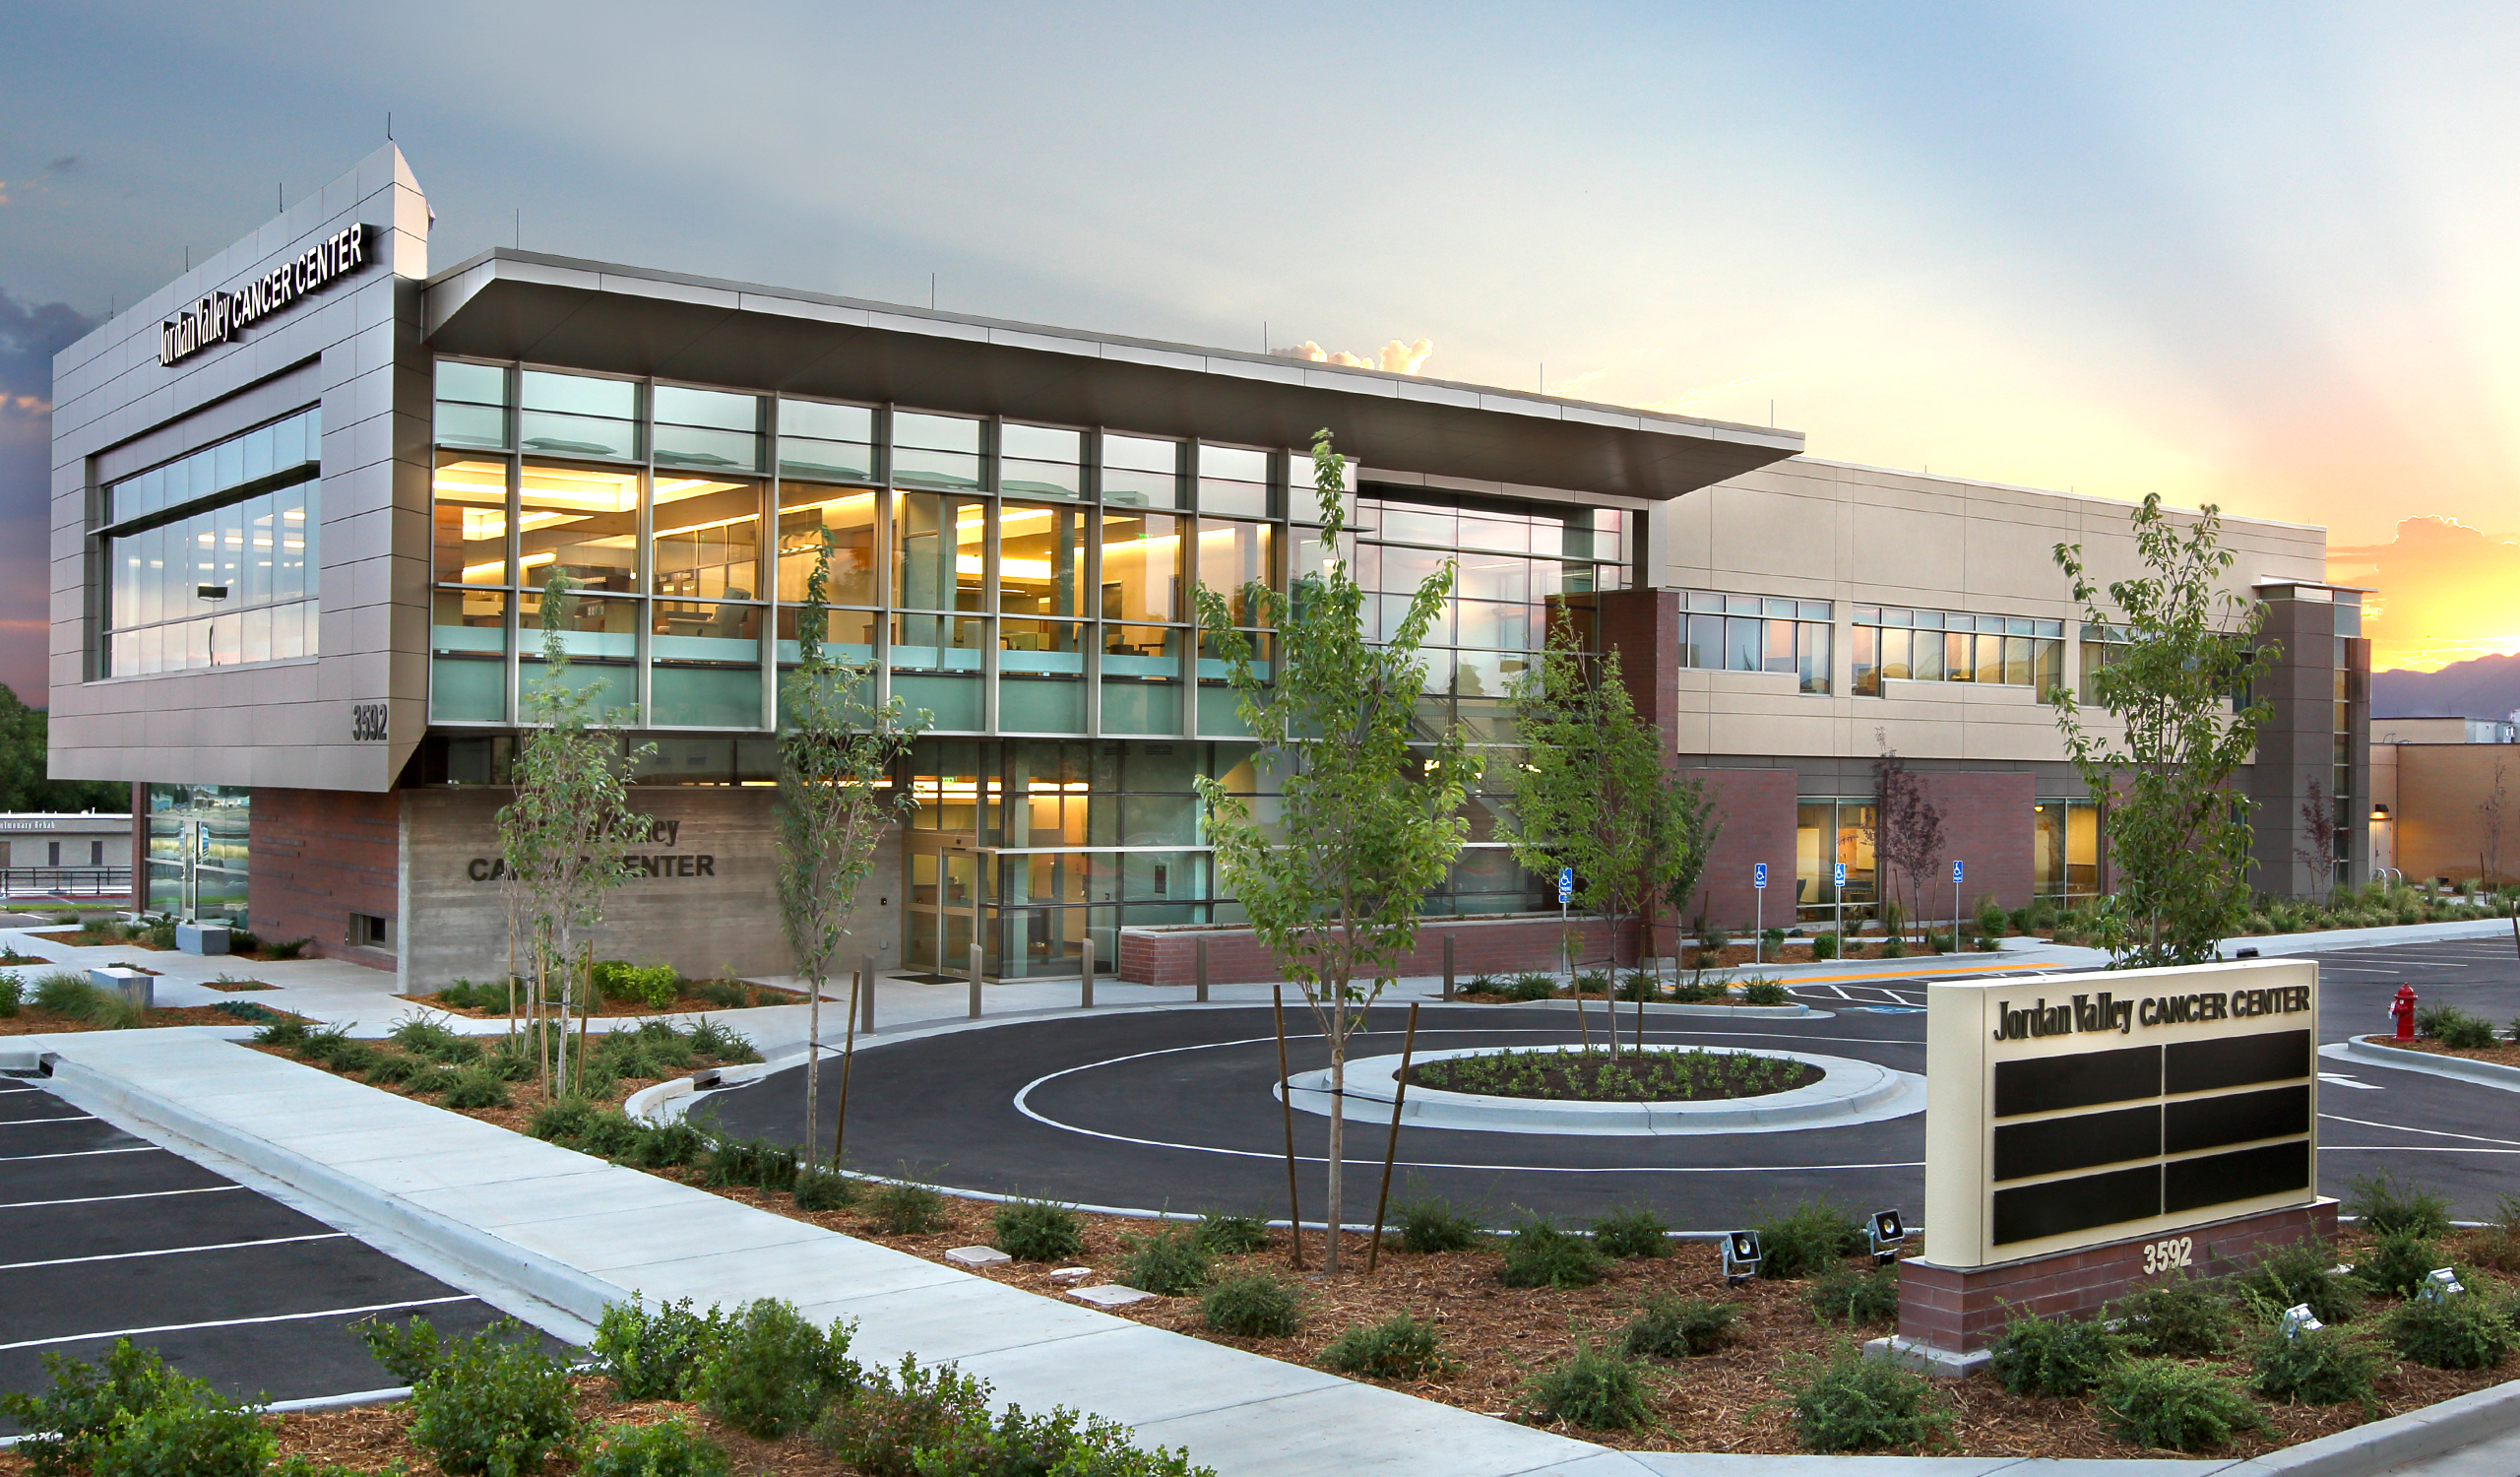 Exterior rendering of the Jordan Valley Cancer Center